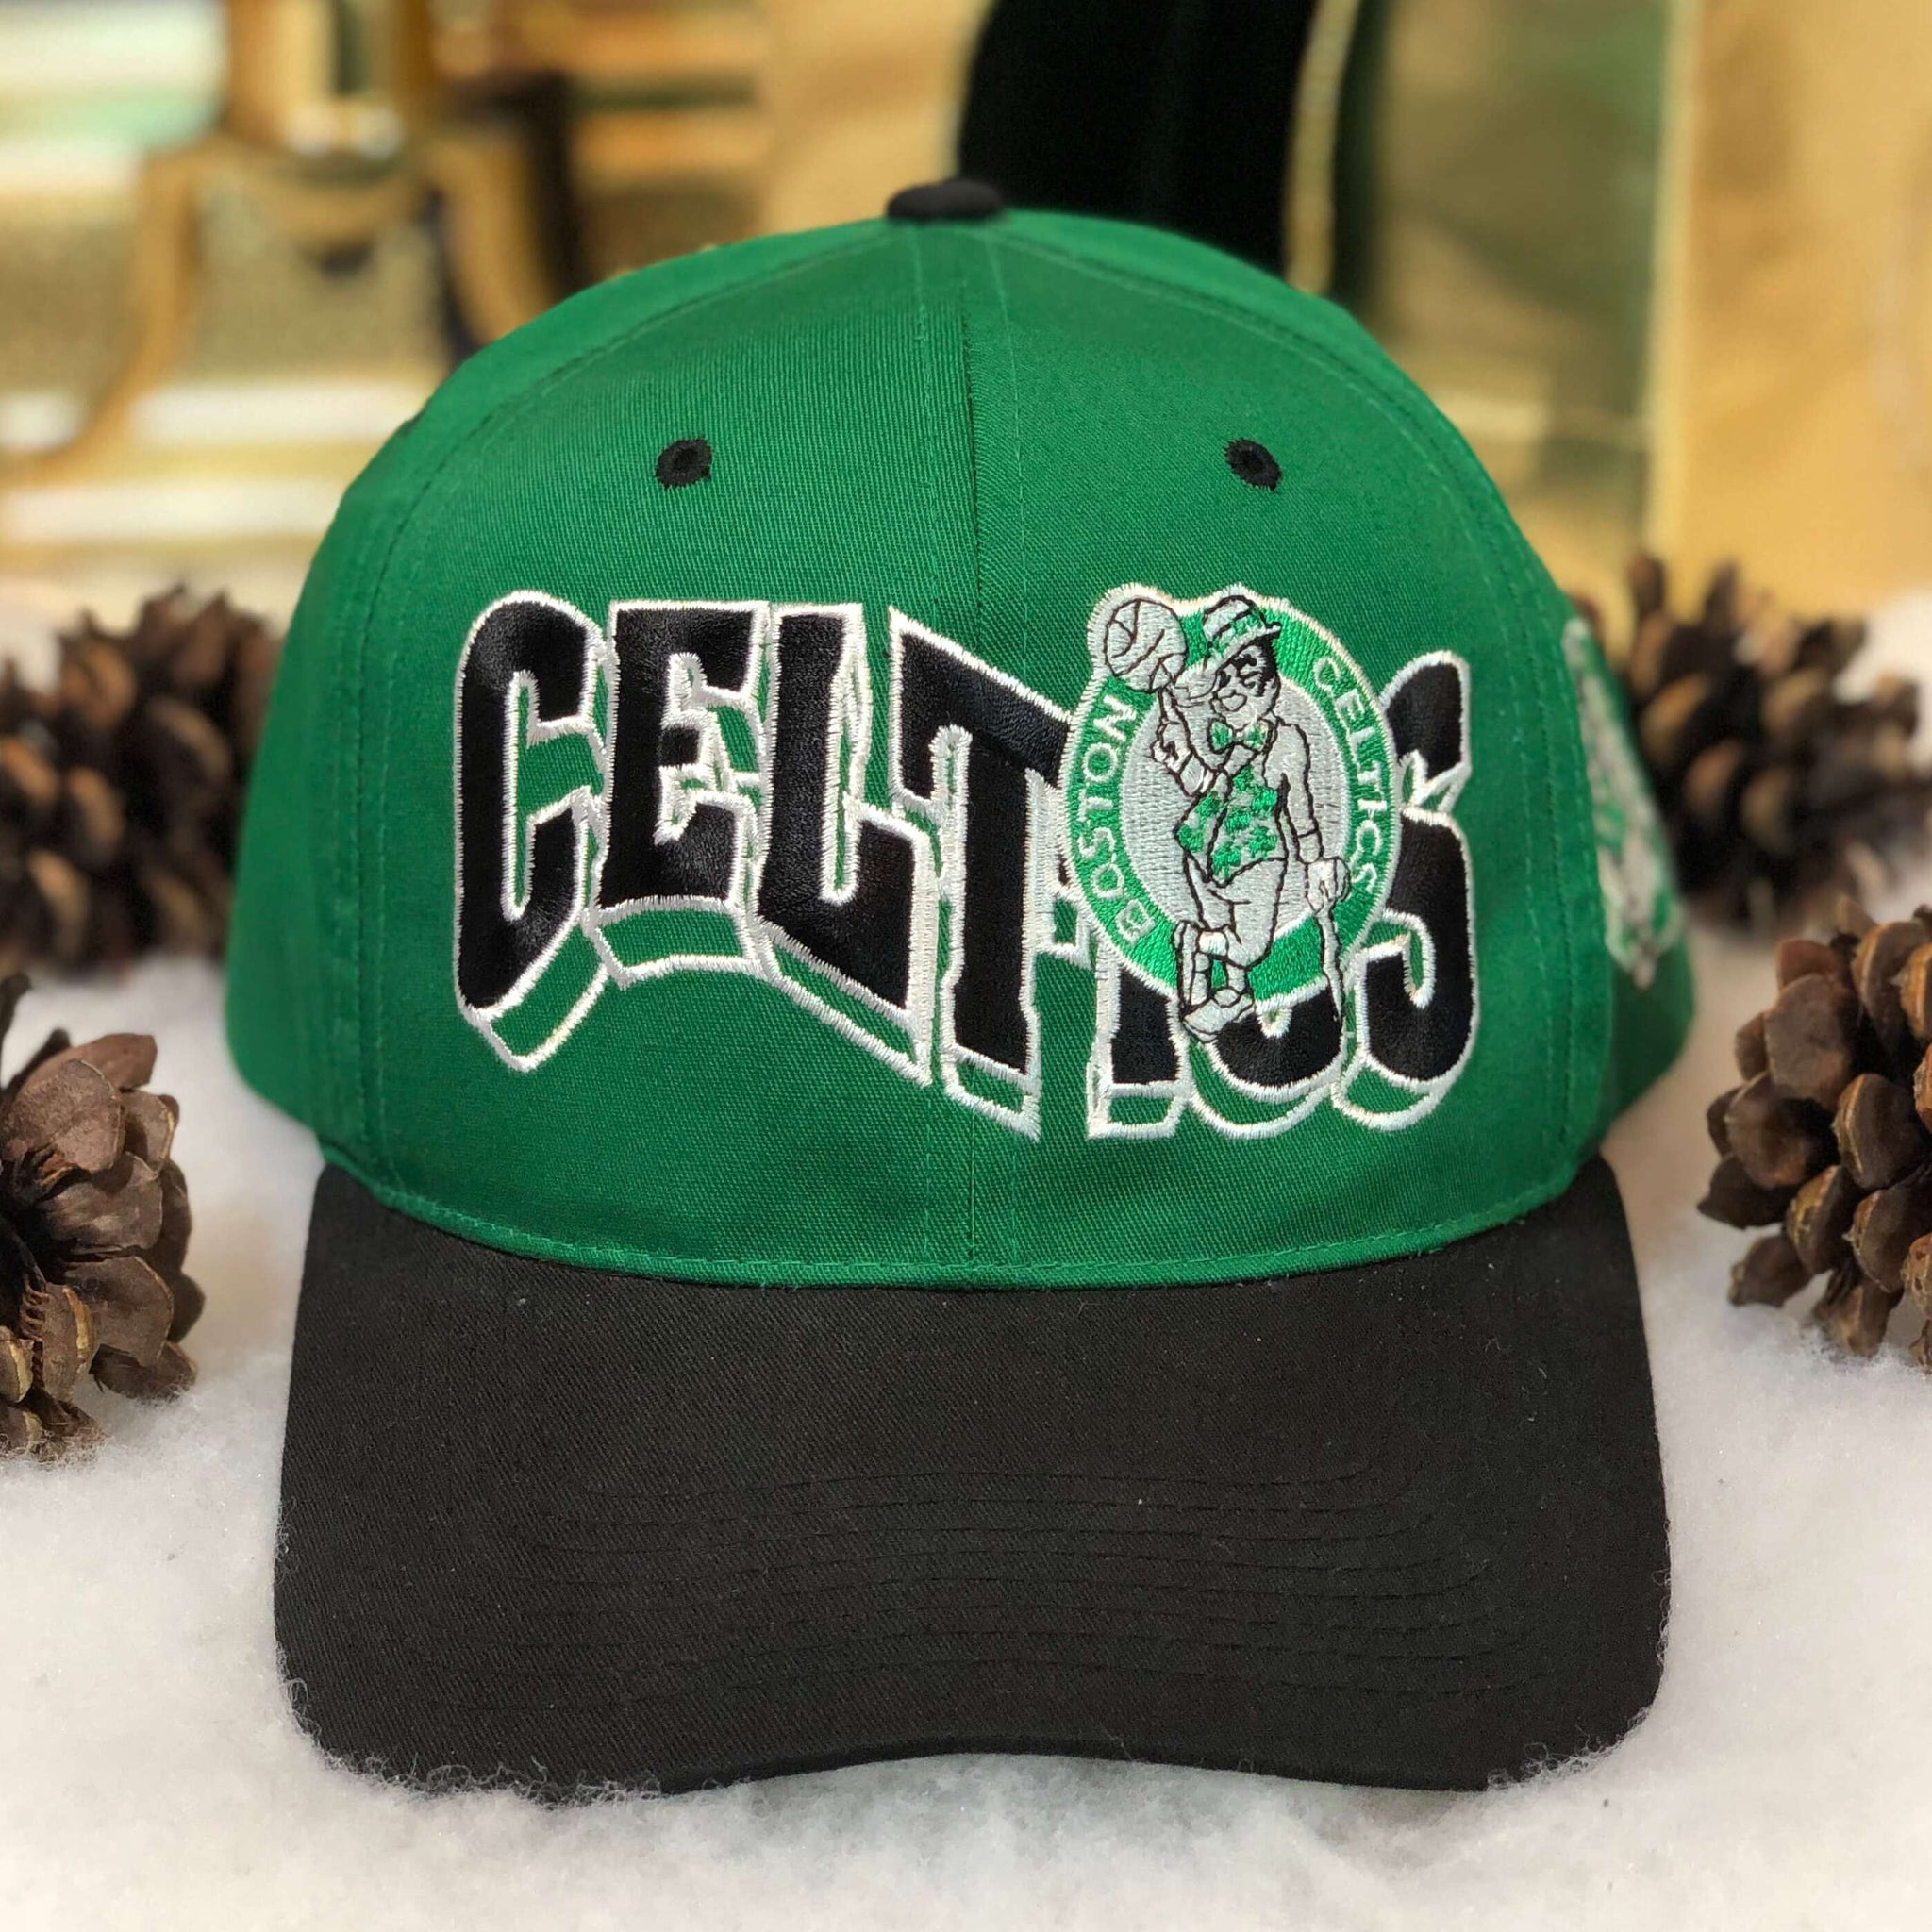 Vintage NBA Boston Celtics The G Cap Wave Twill Snapback Hat